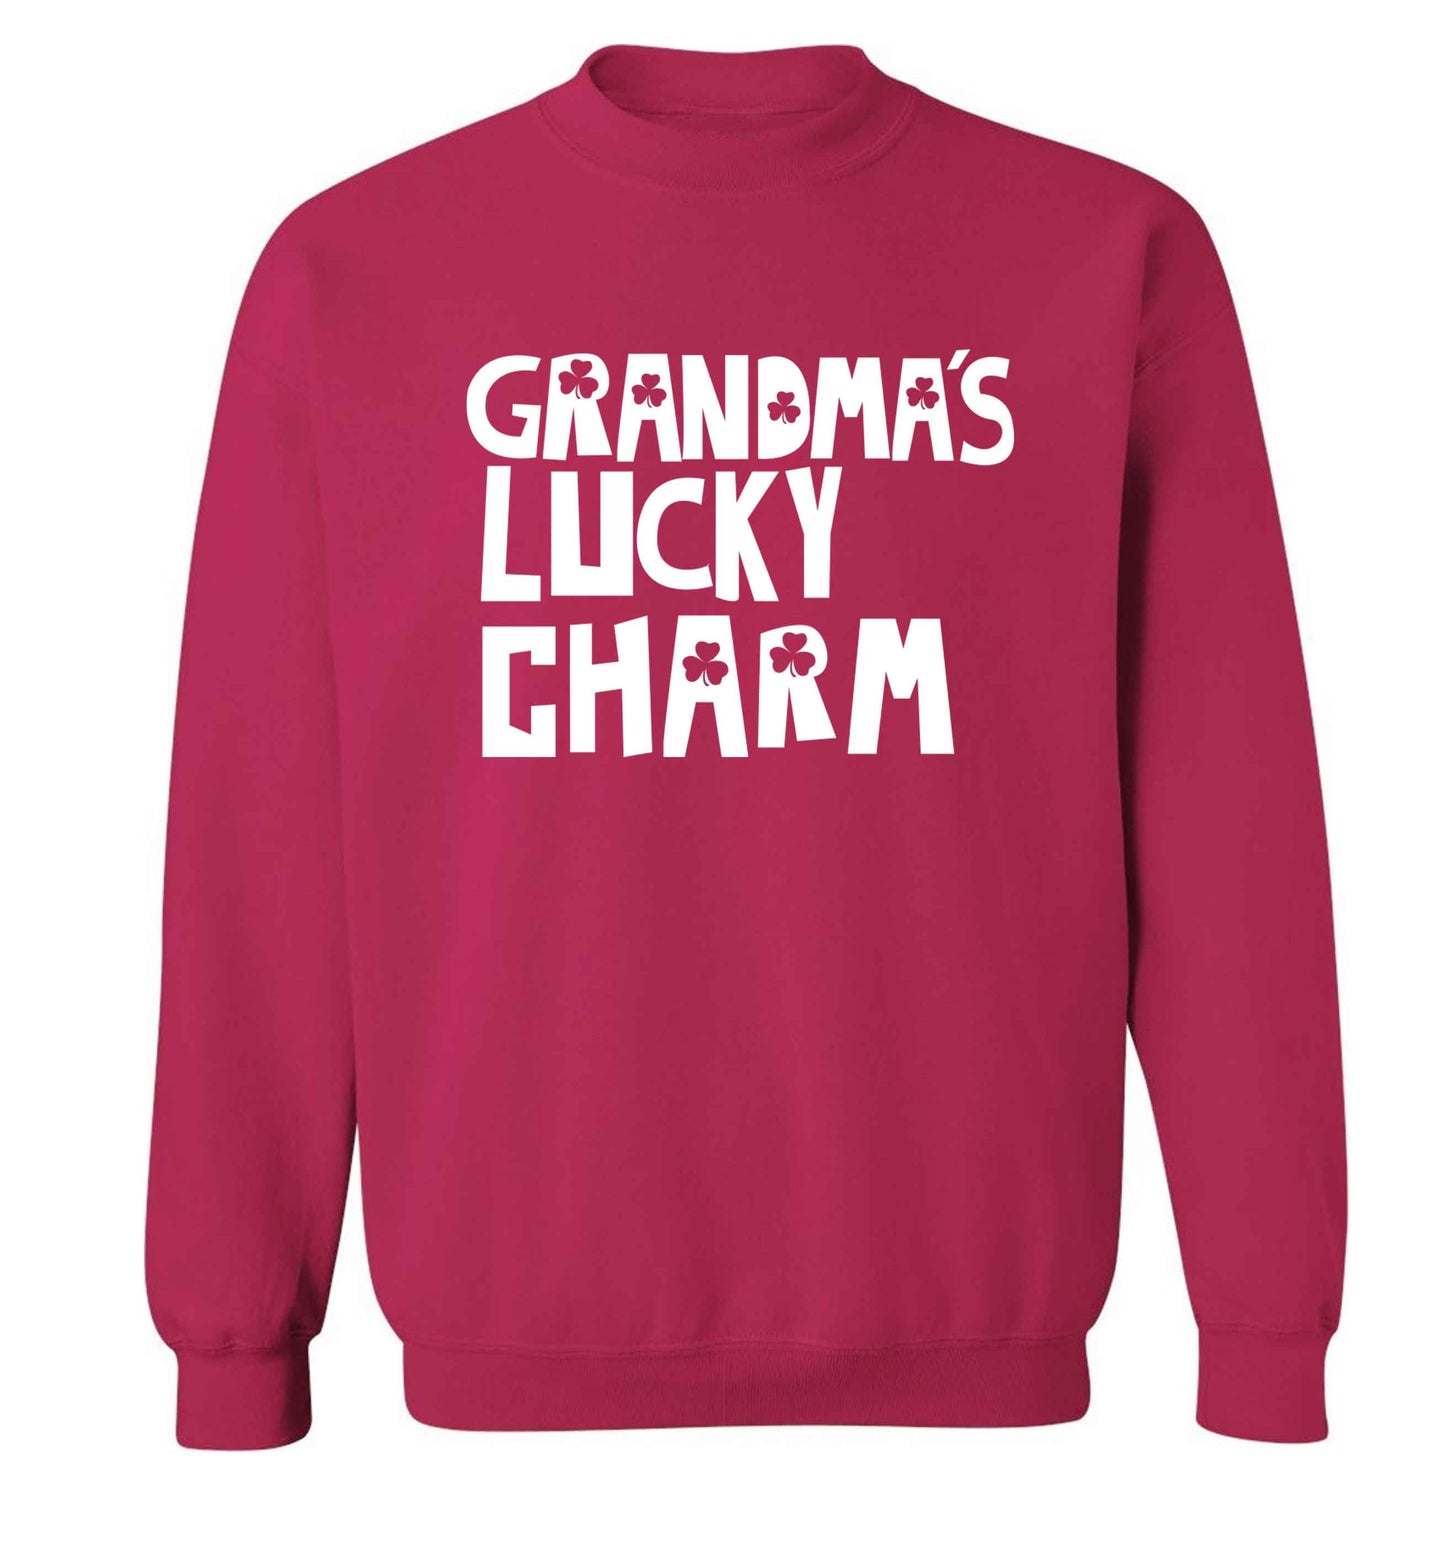 Grandma's lucky charm adult's unisex pink sweater 2XL